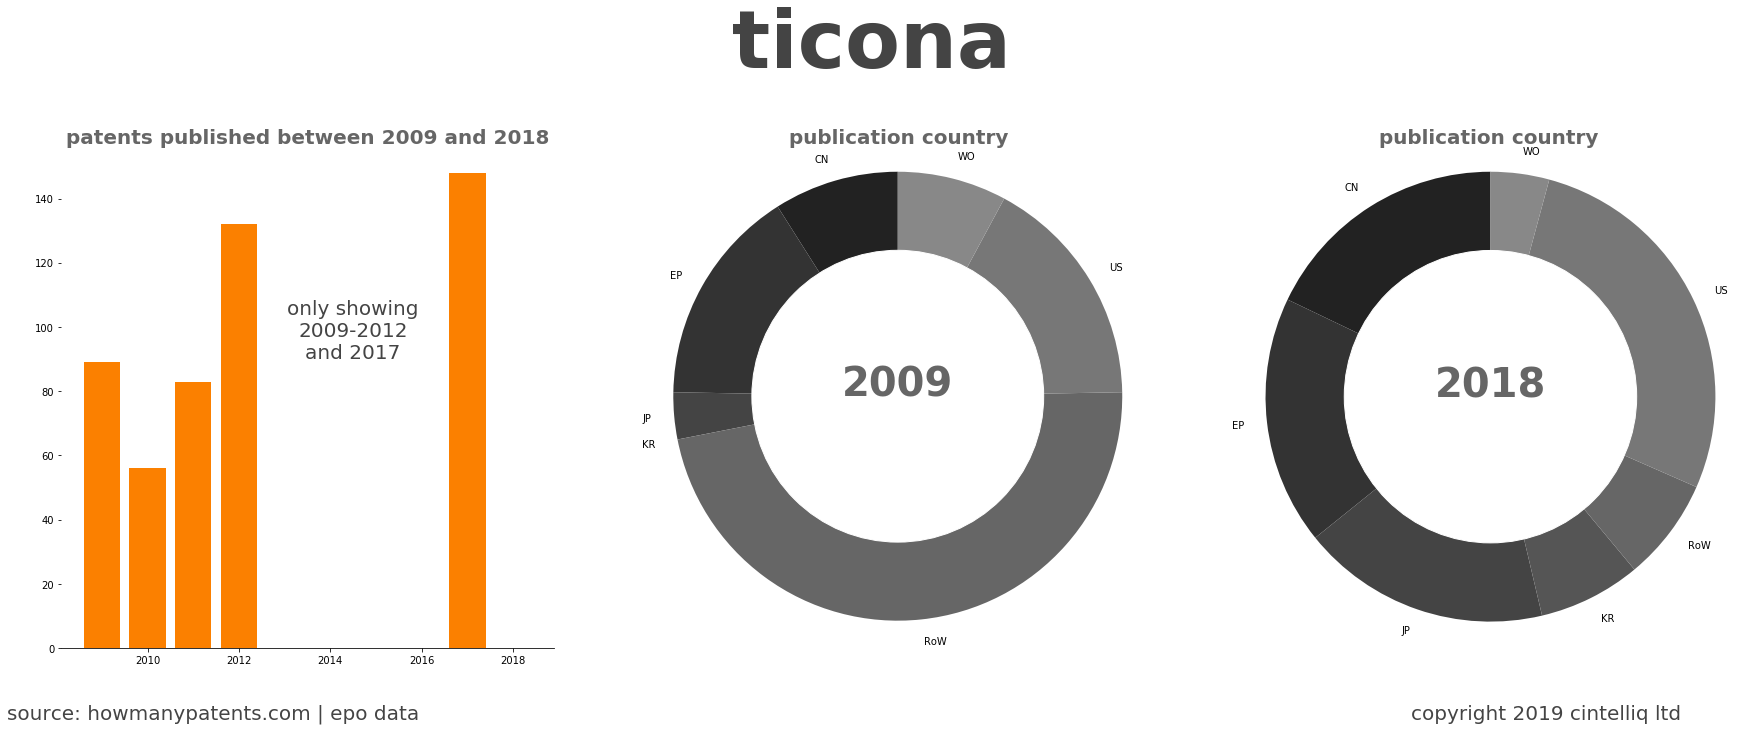 summary of patents for Ticona